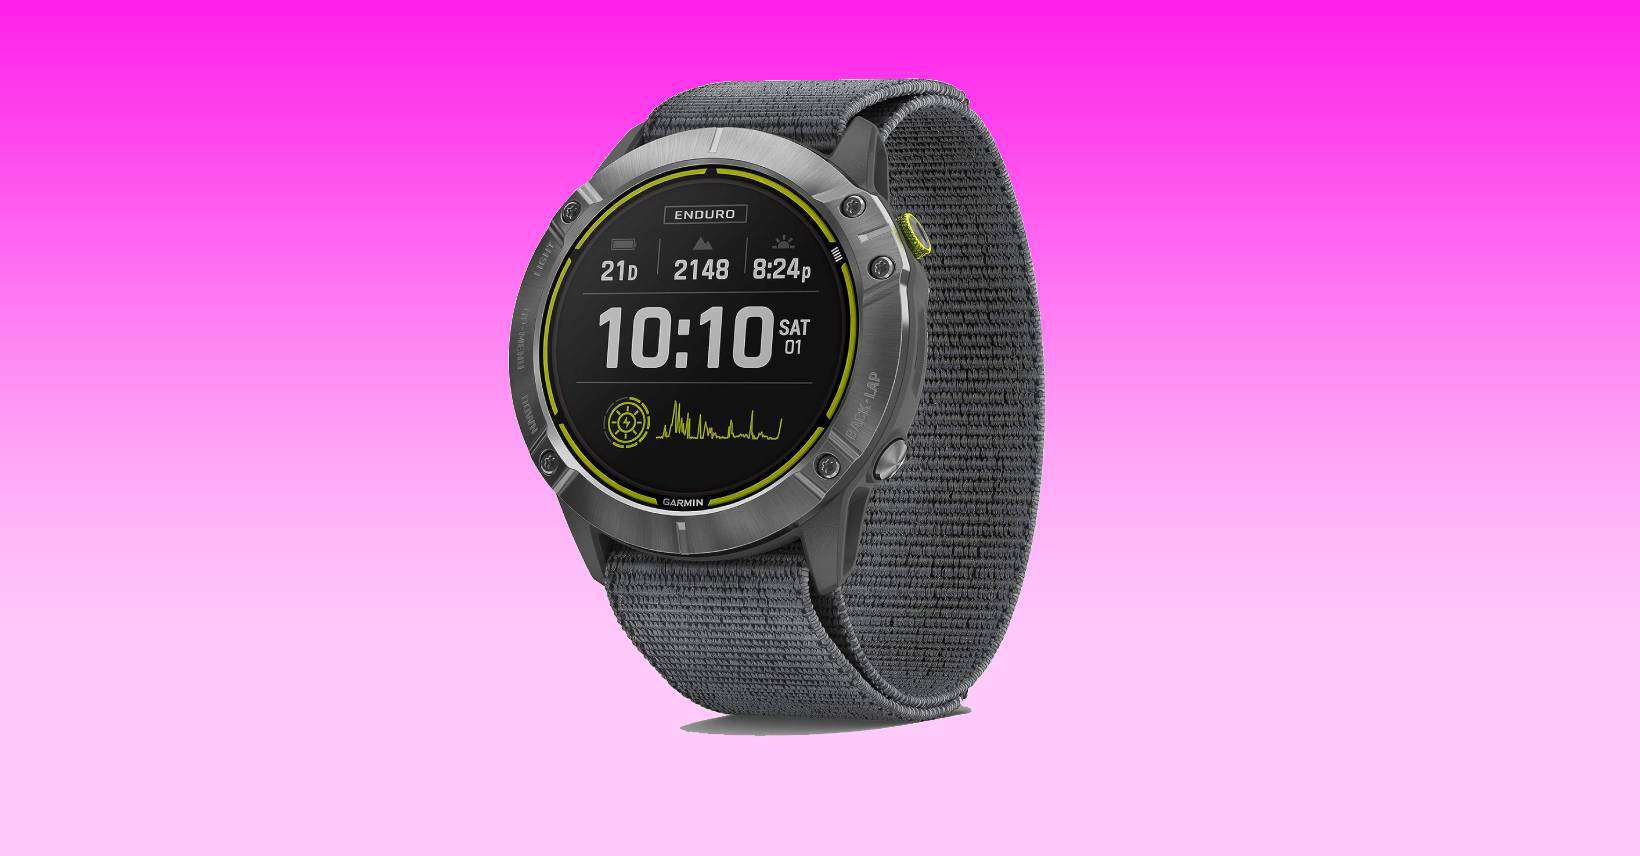 Garmin Enduro Smartwatch at lowest price EVER on Amazon!